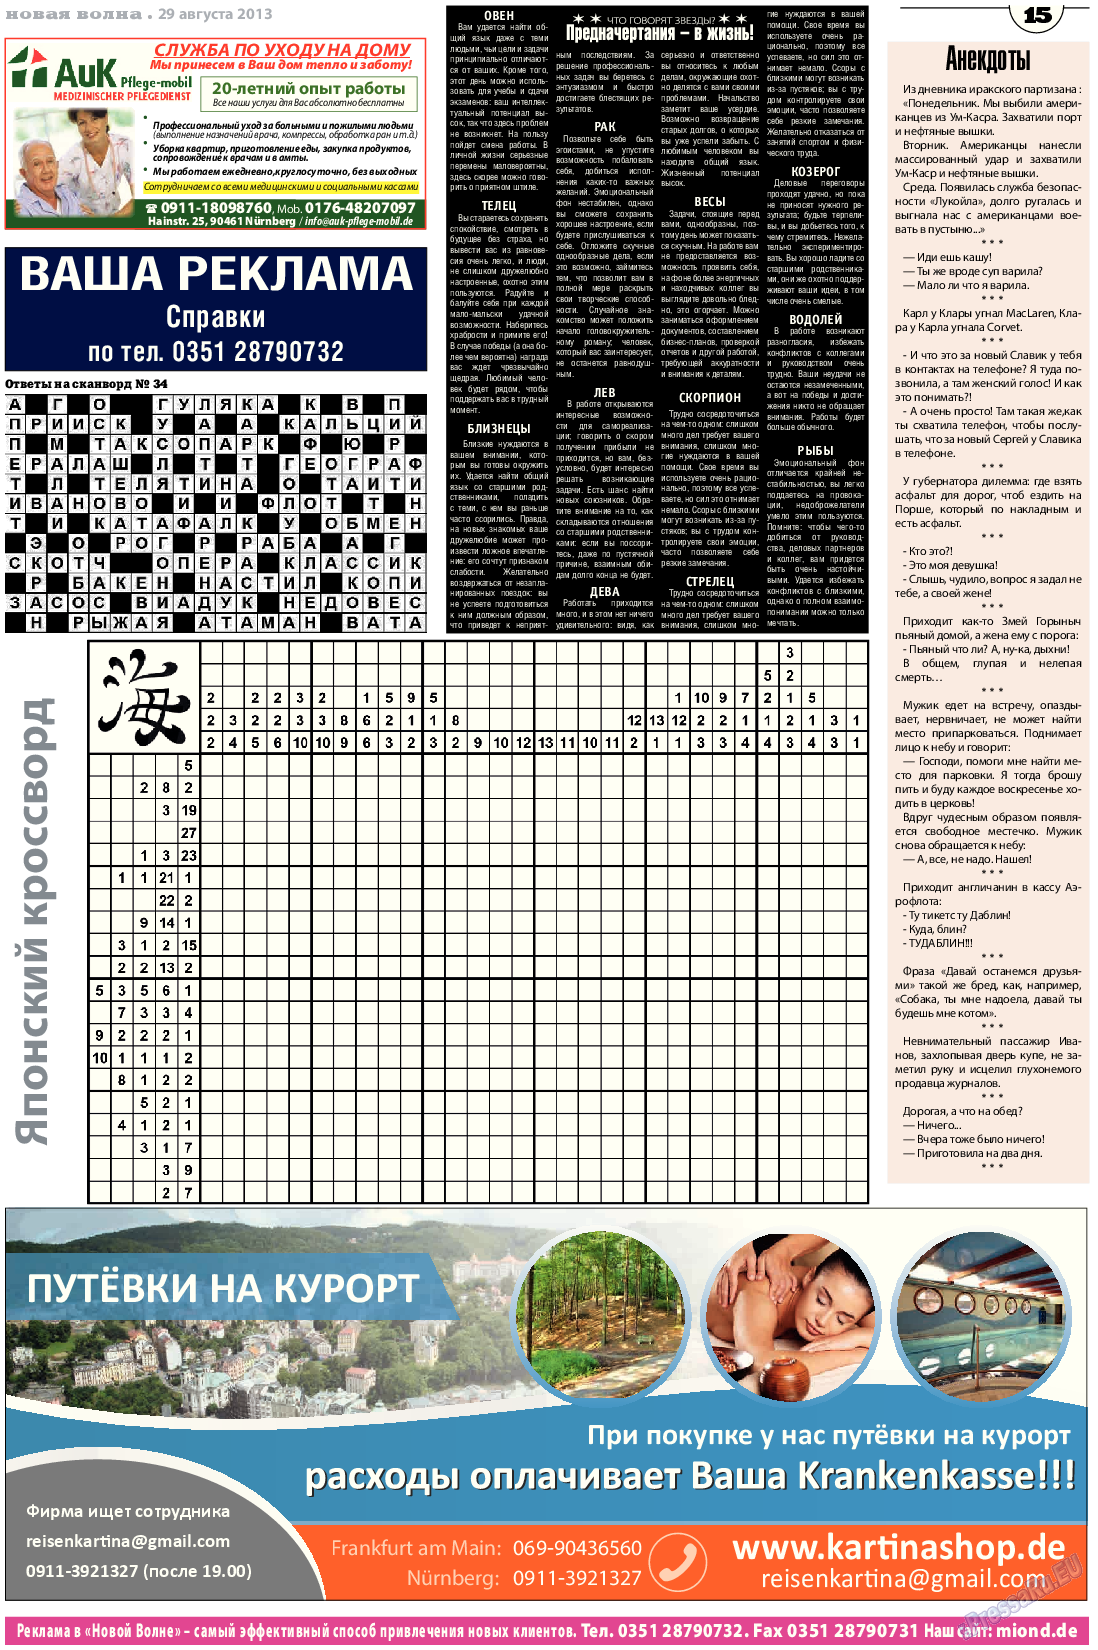 Новая Wолна, газета. 2013 №35 стр.15